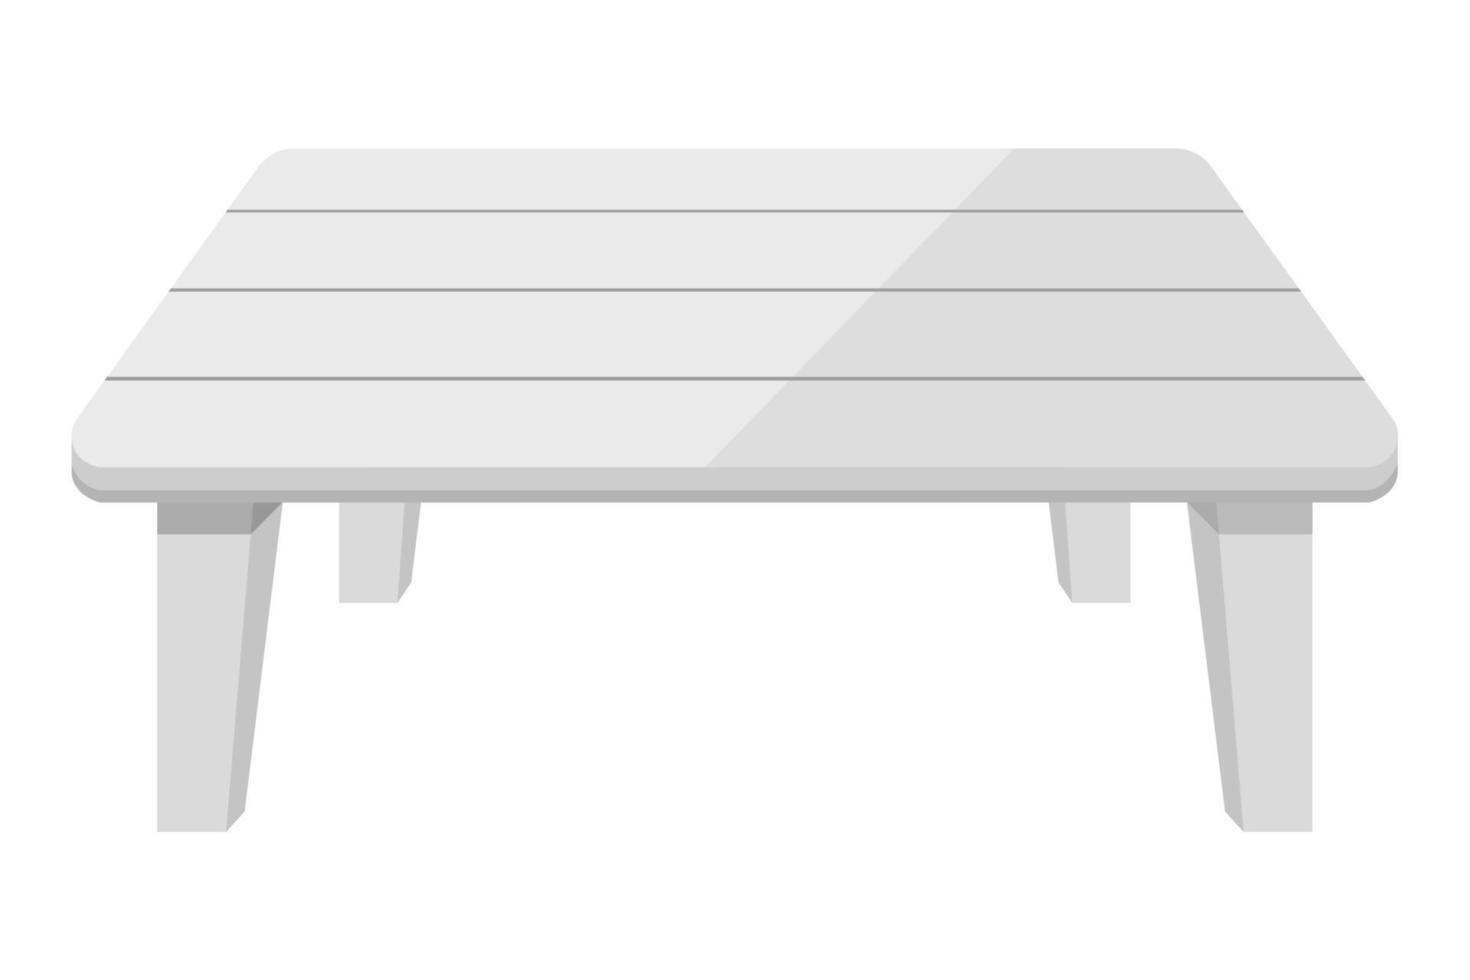 mesa de plástico branco em branco vetor